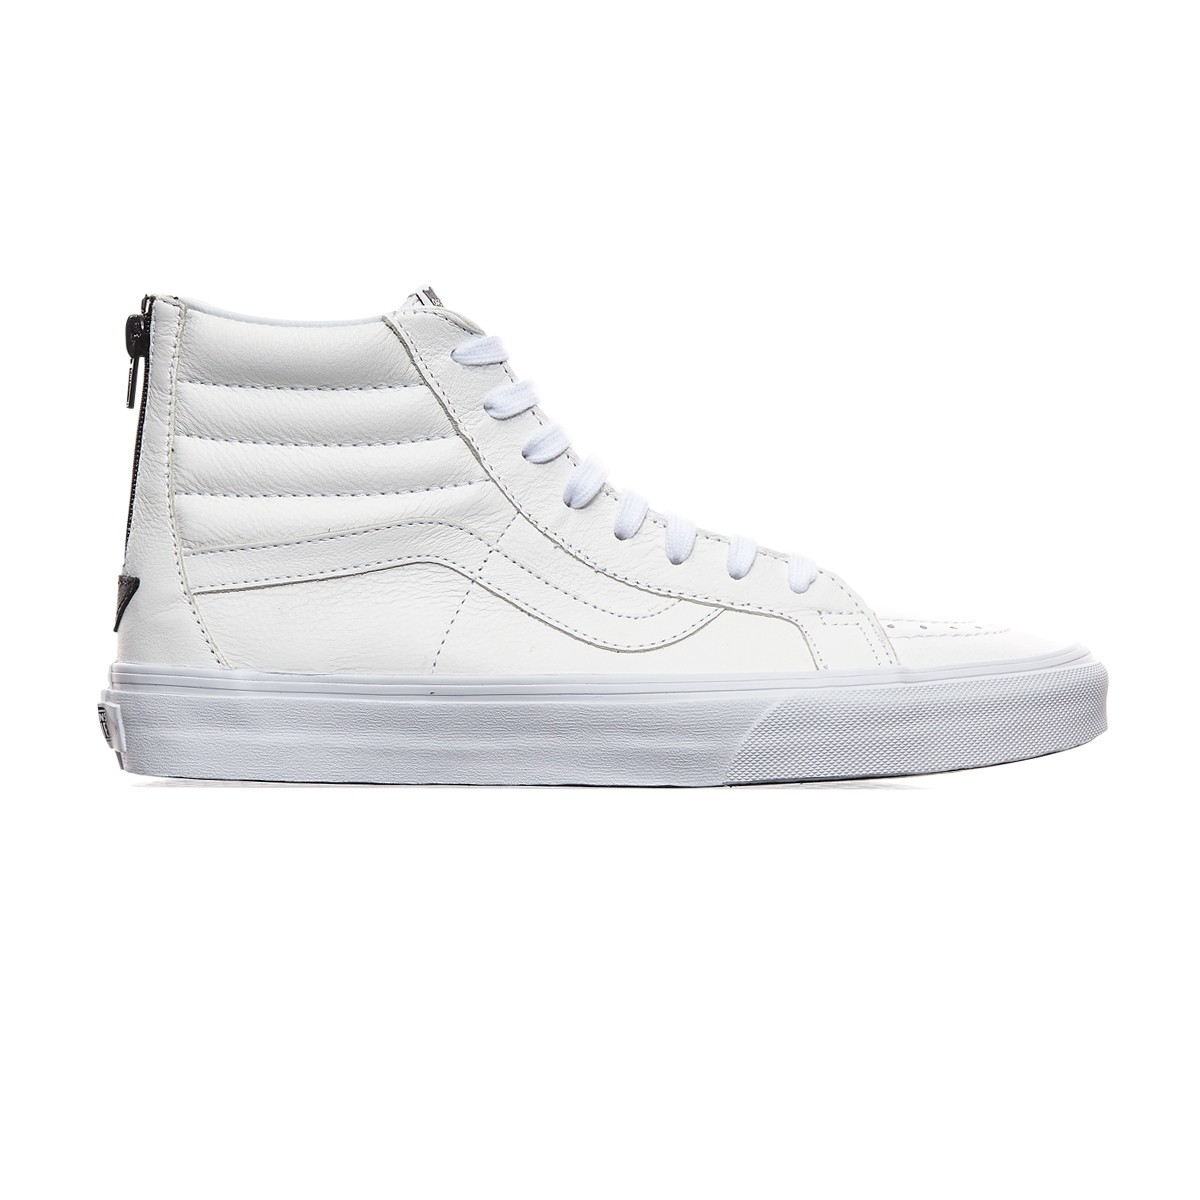 Lyst - Vans Sk8-hi Reissue Zip Premium Leather Sneakers in White for Men